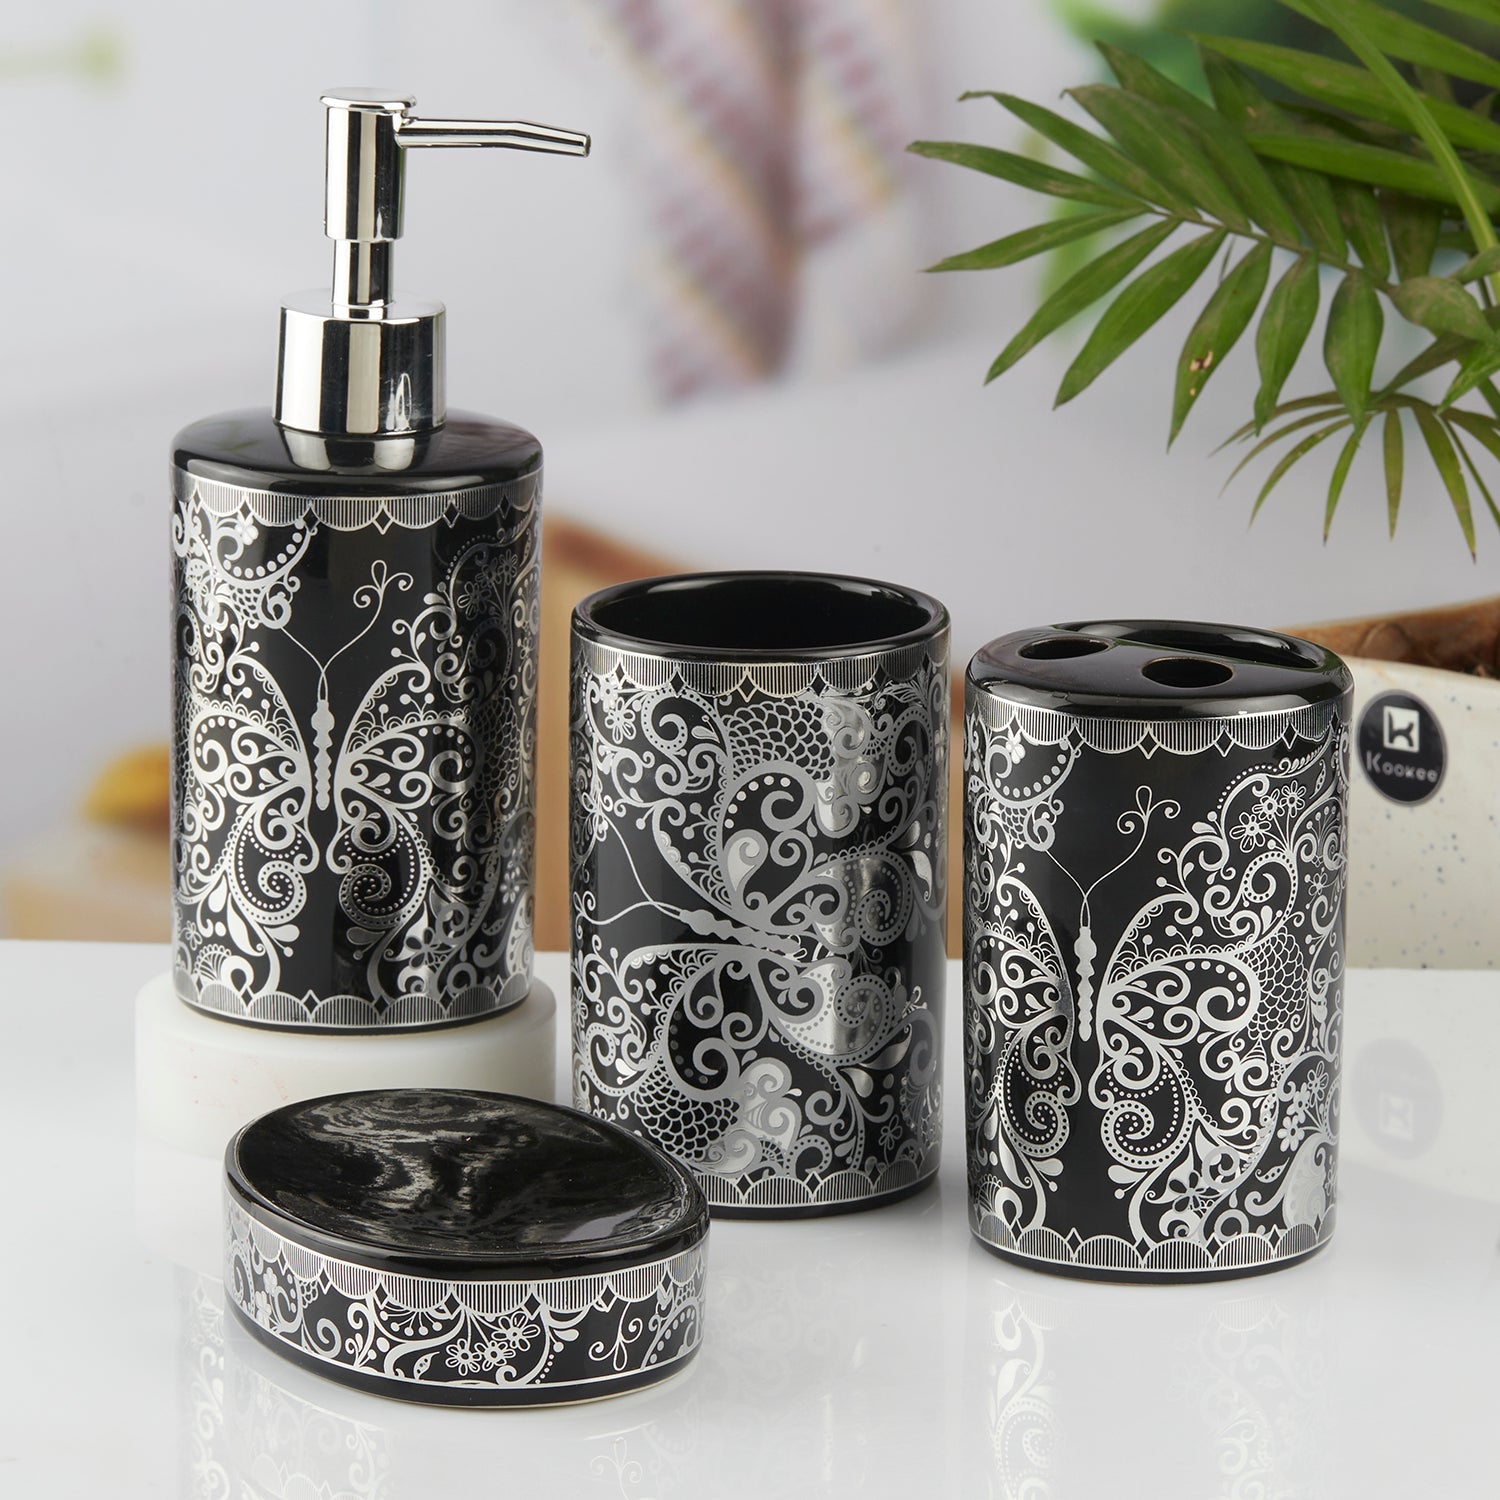 Ceramic Bathroom Set of 4 with Soap Dispenser (10461)